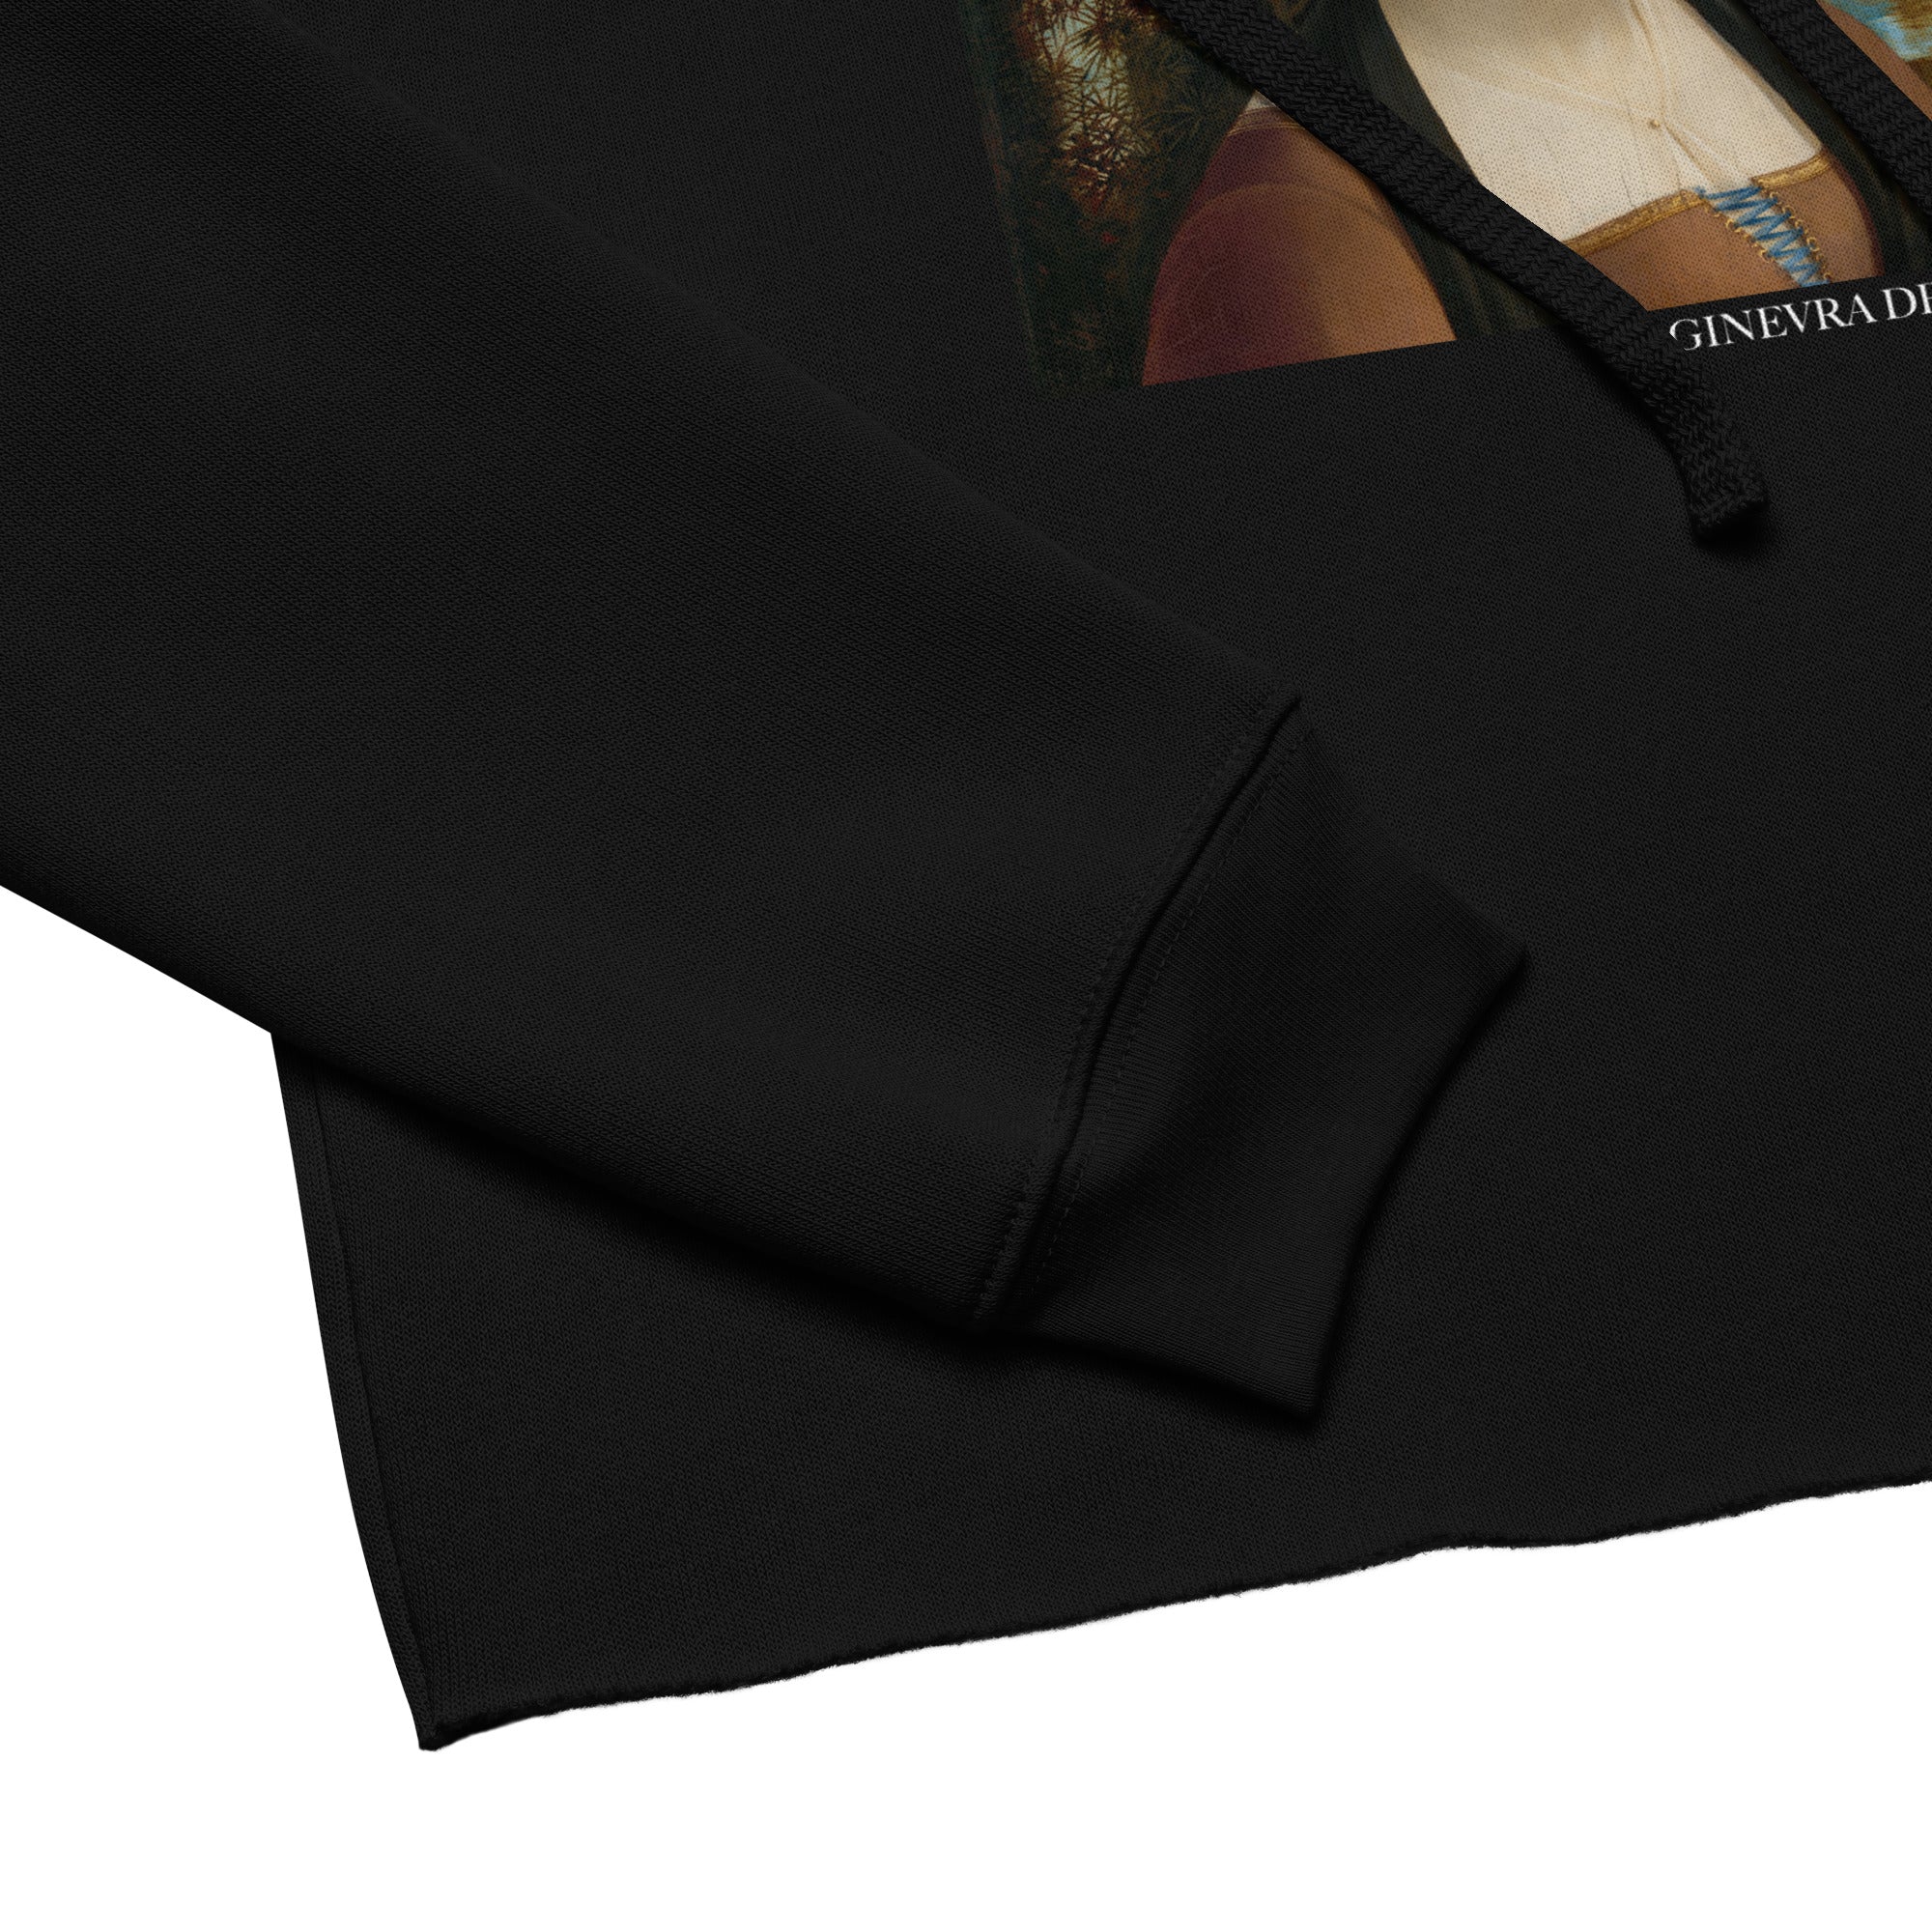 Leonardo da Vinci 'Ginevra de' Benci' Famous Painting Cropped Hoodie | Premium Art Cropped Hoodie